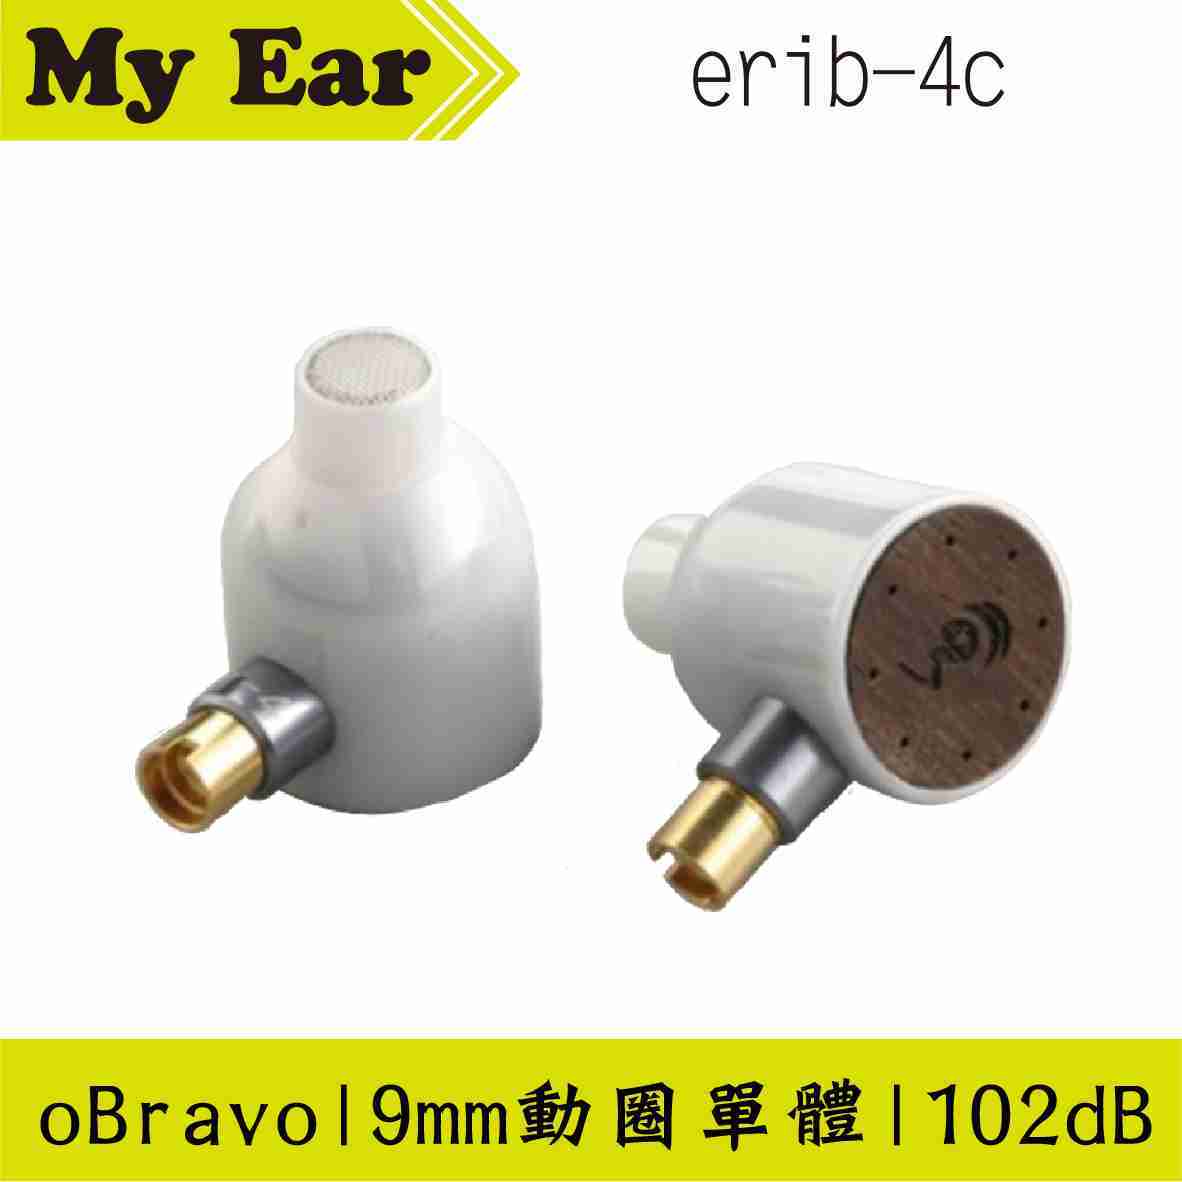 oBravo erib-4c 平面振膜 高音 耳道式耳機 | My Ear耳機專門店